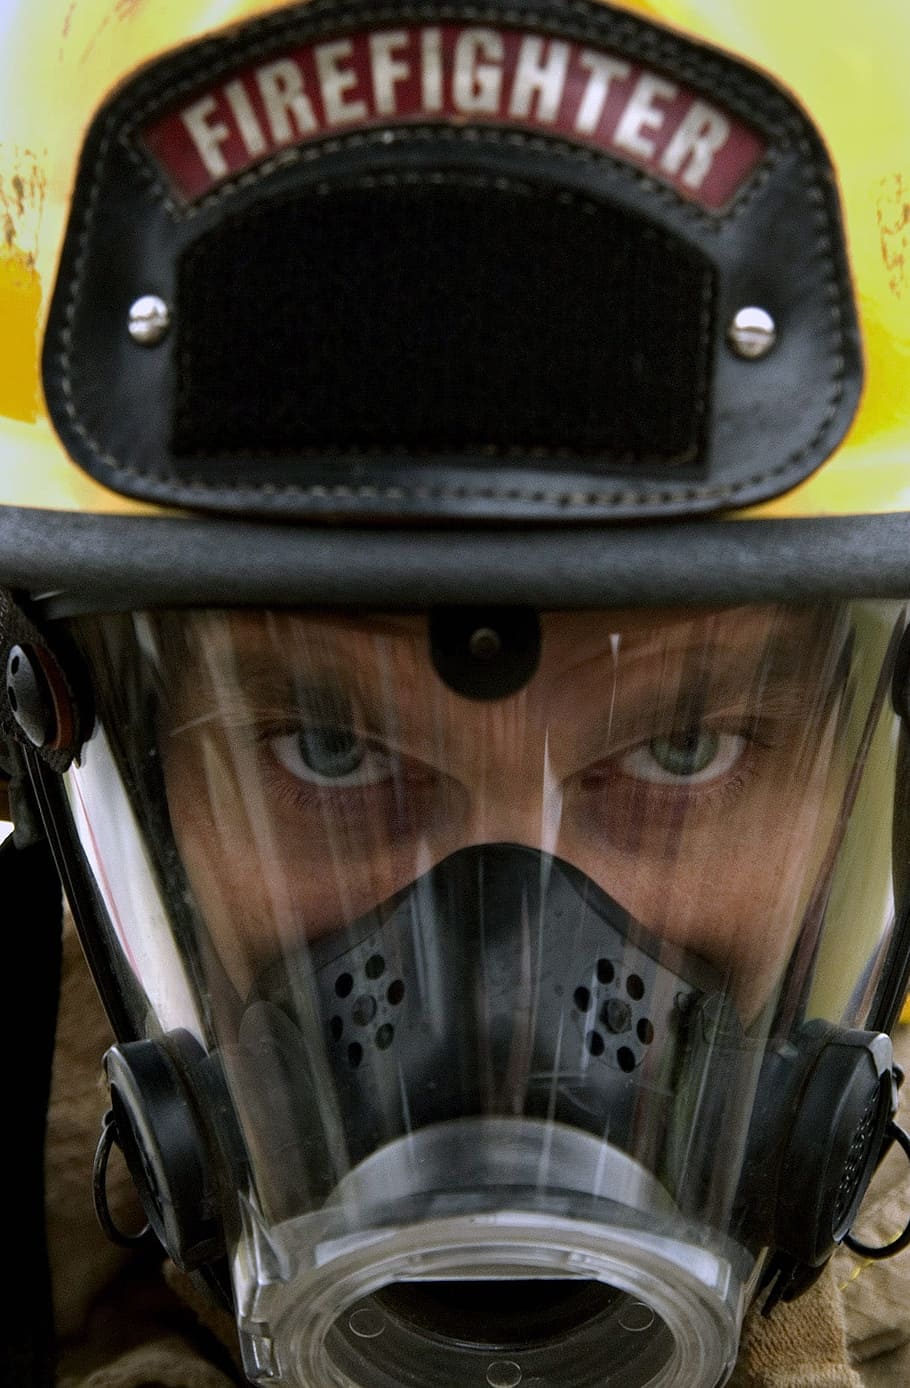 black, gray, firefighter helmet, Fireman, Helmet, Protection, Firefighter, uniform, suit, equipment